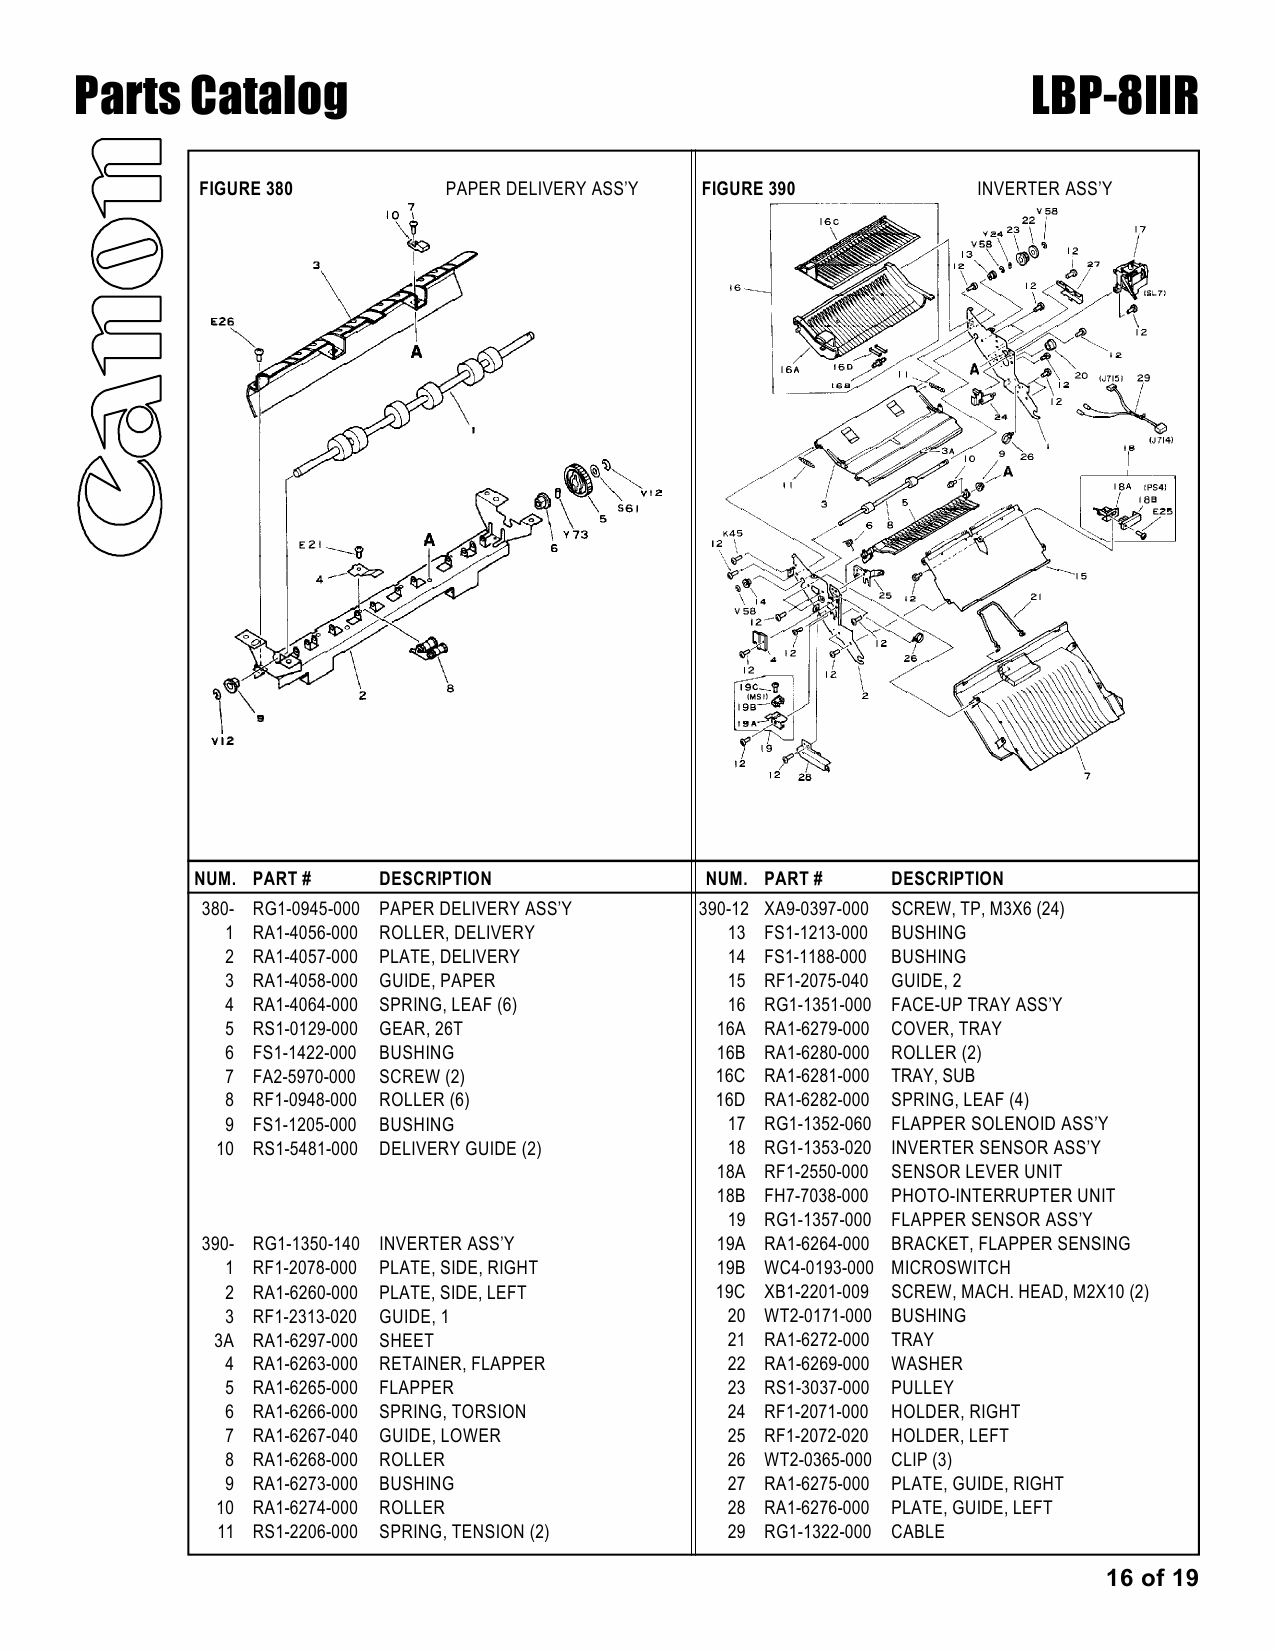 Canon imageCLASS LBP-8IIR Parts Catalog Manual-5